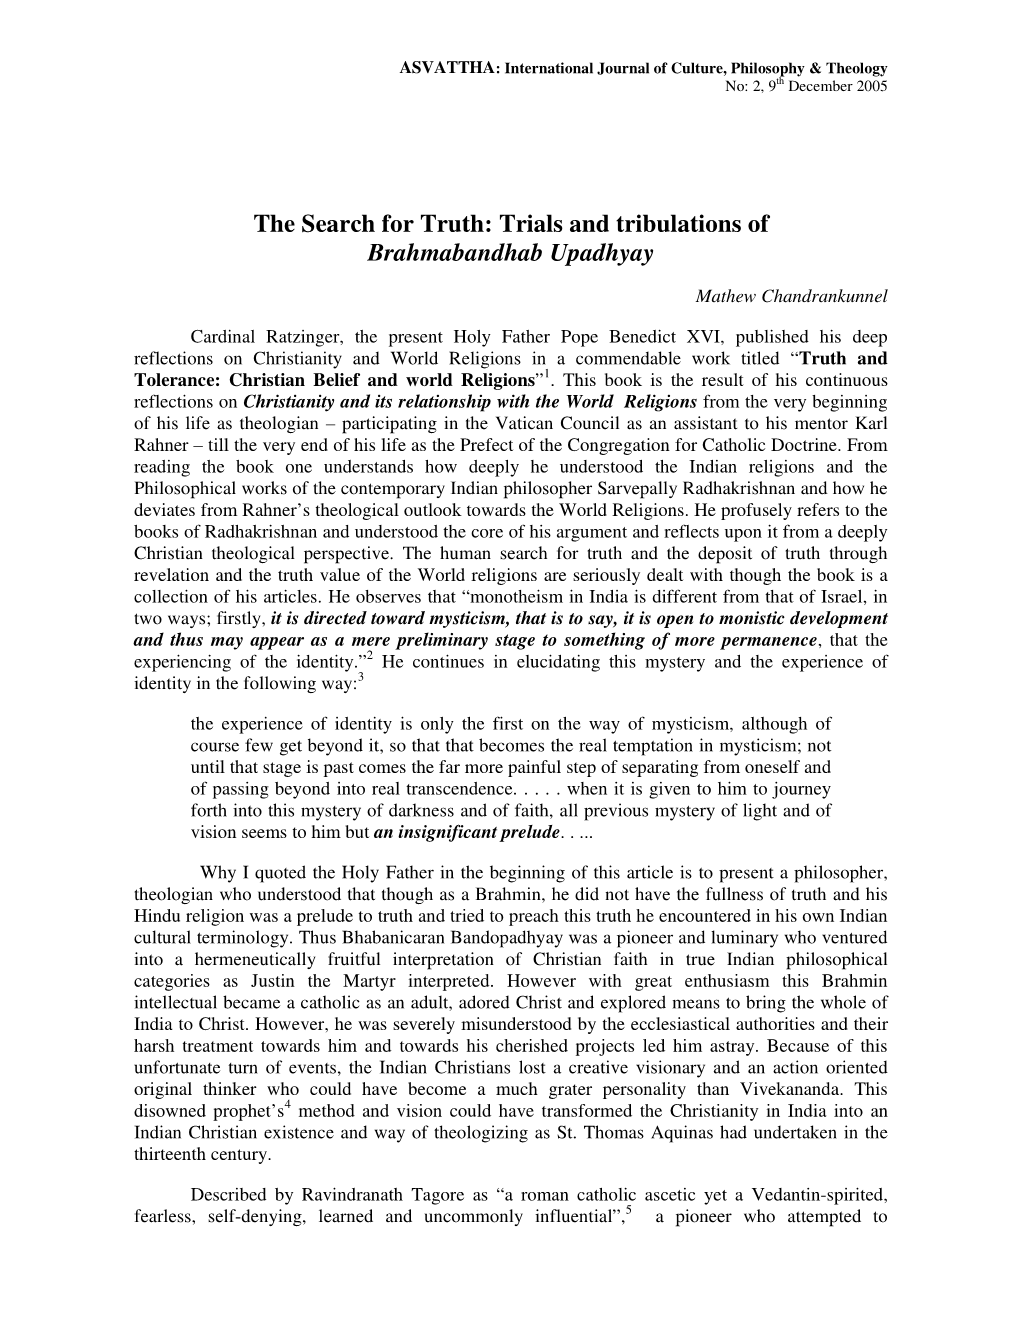 Trials and Tribulations of Brahmabandhab Upadhyay